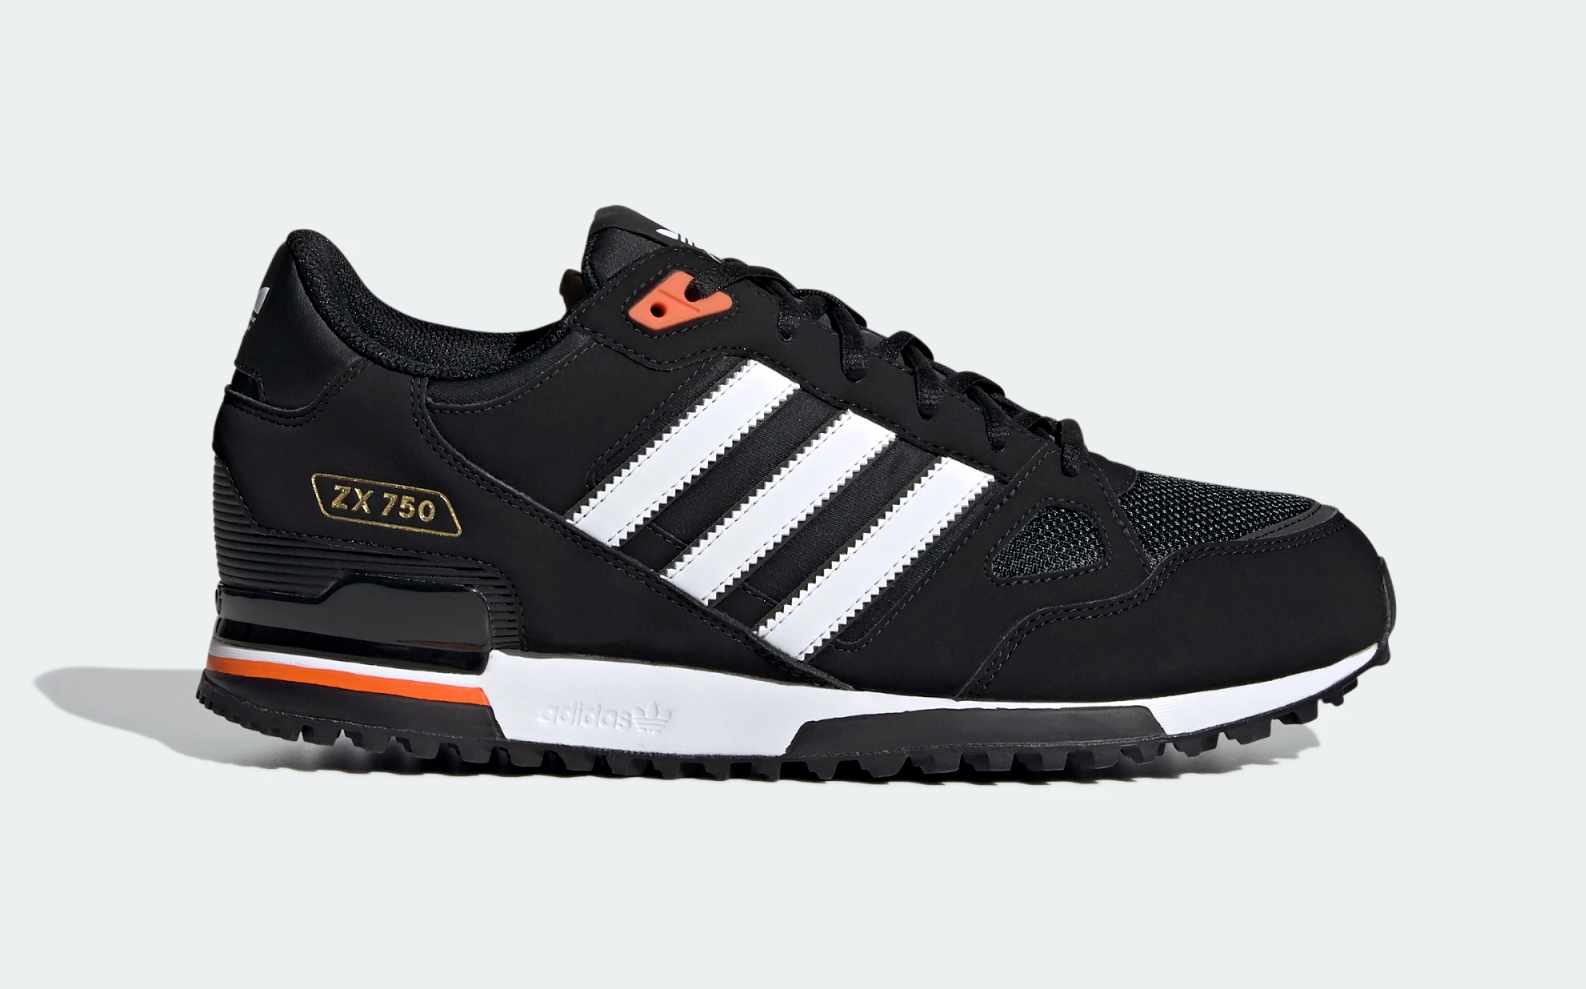 adidas Originals Mens ZX 750 Trainers in Black and Orange